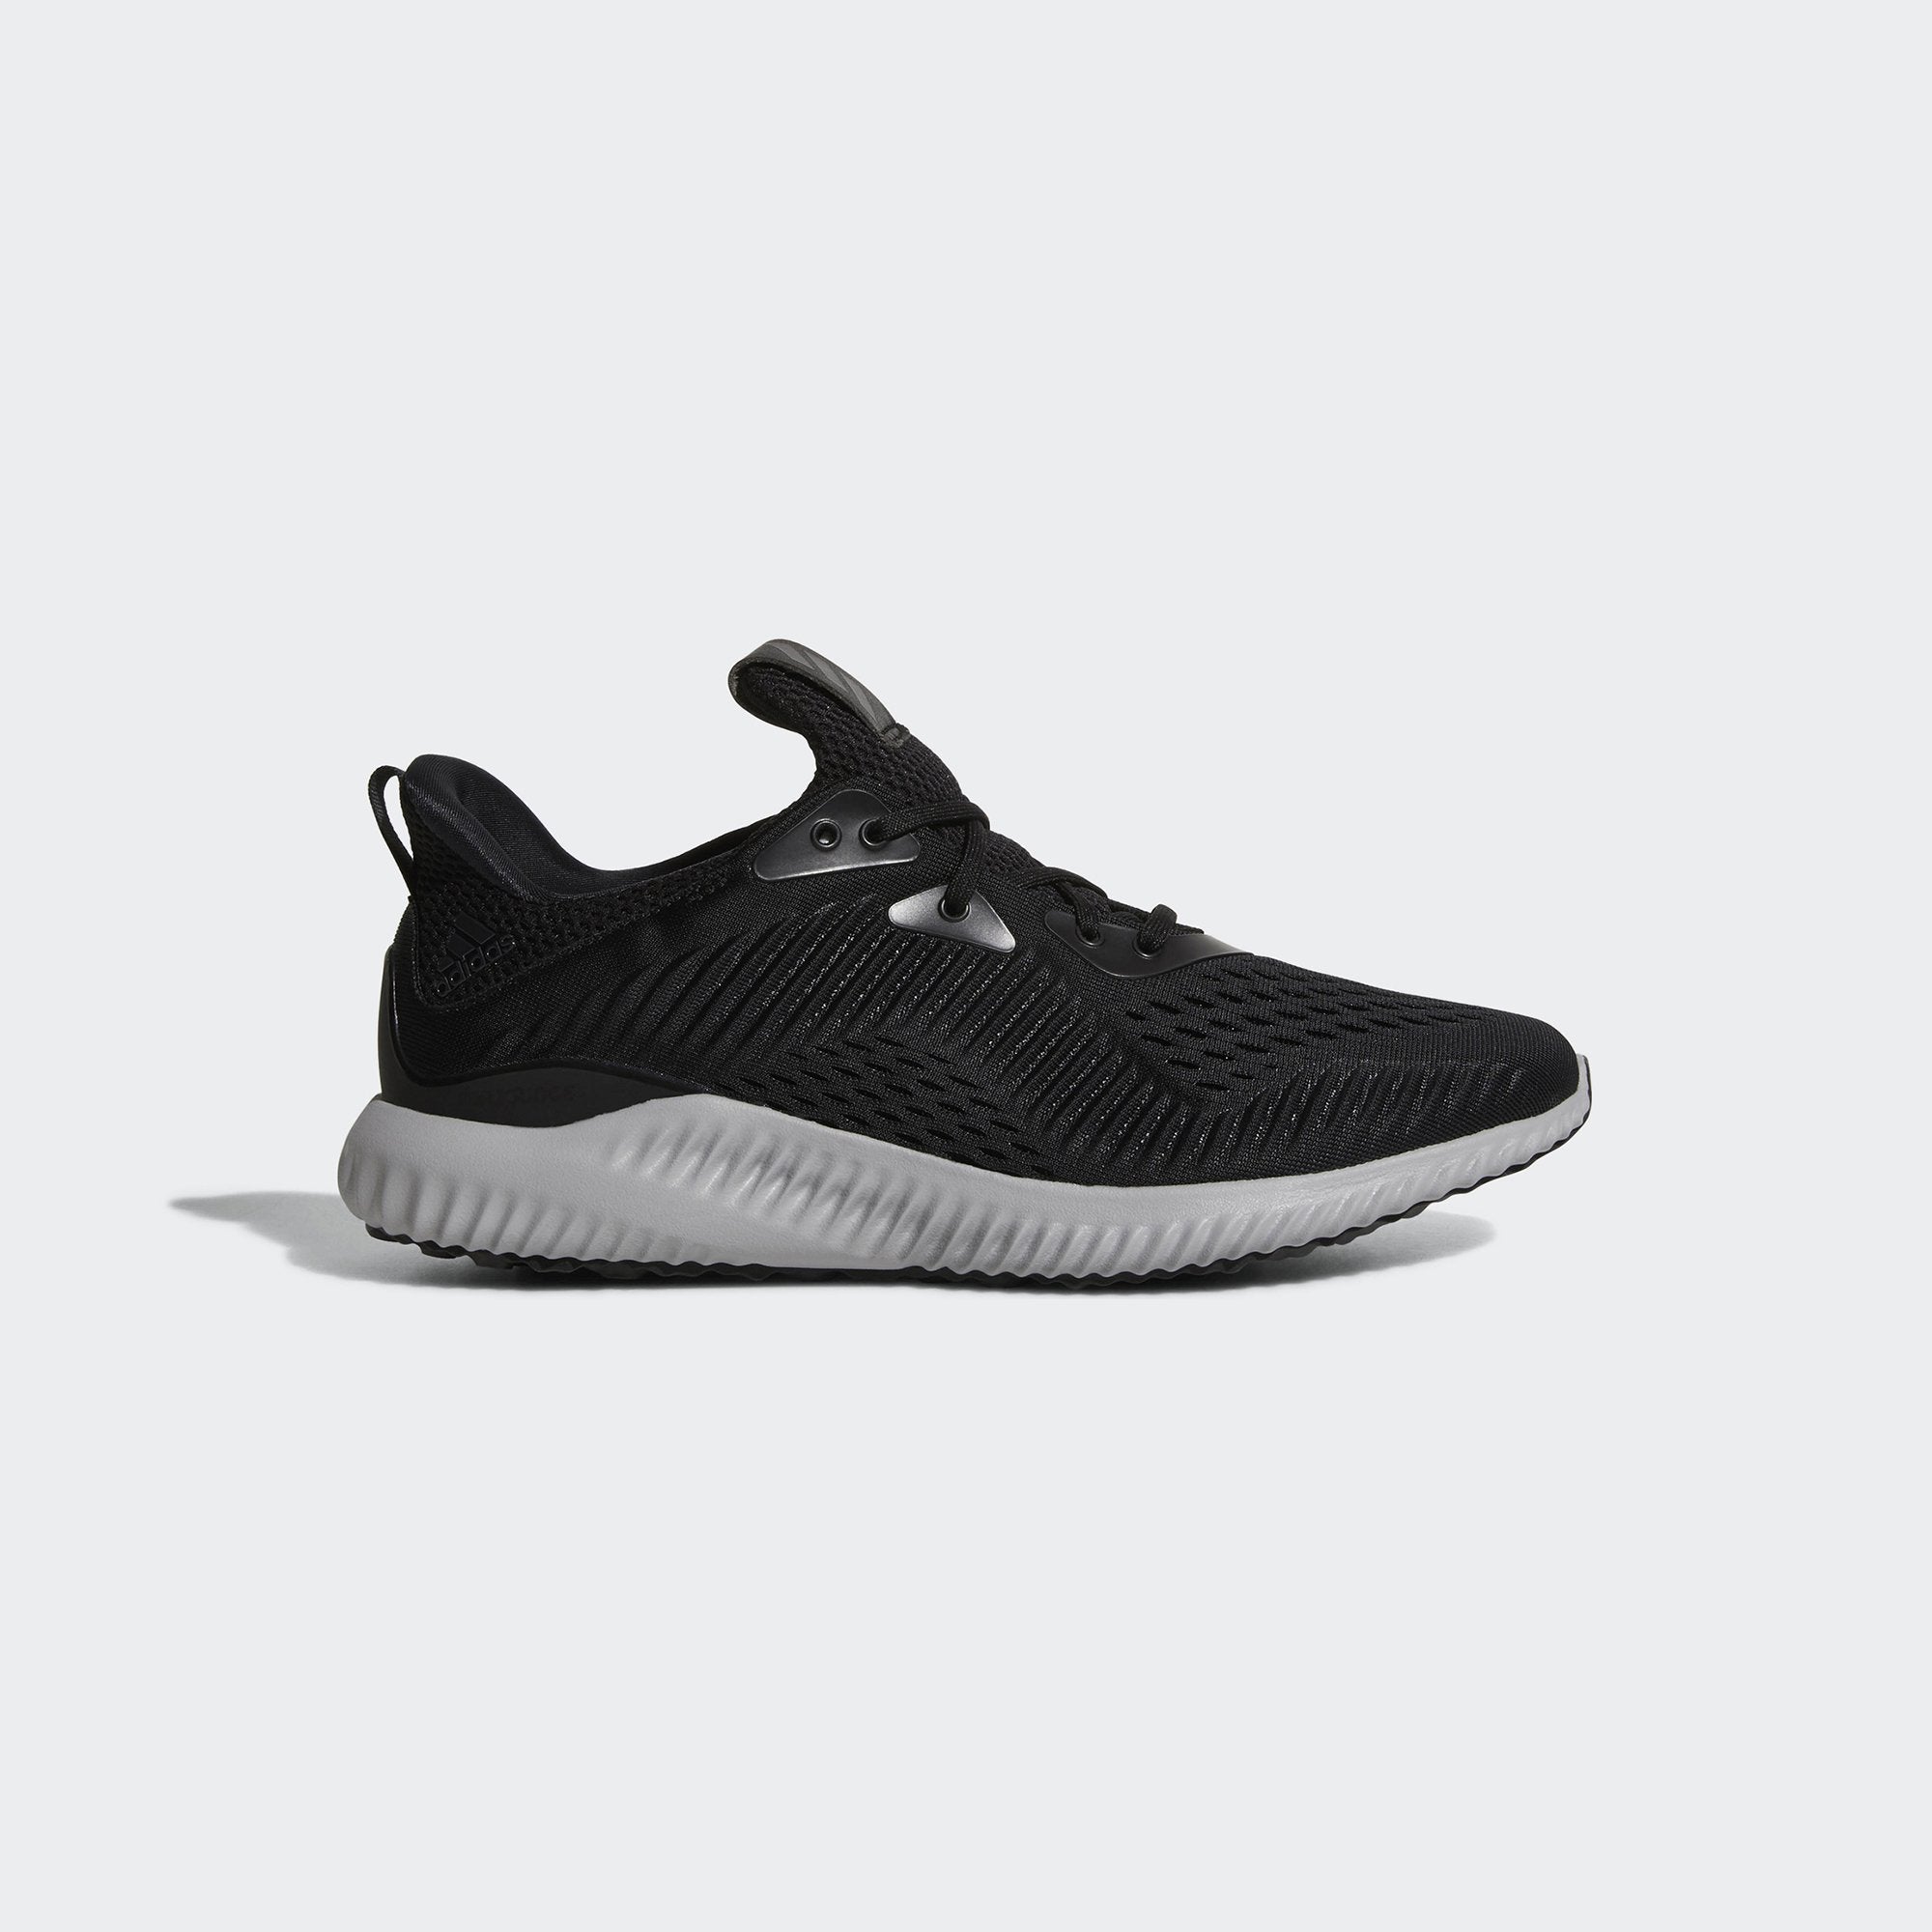 adidas mesh running shoes